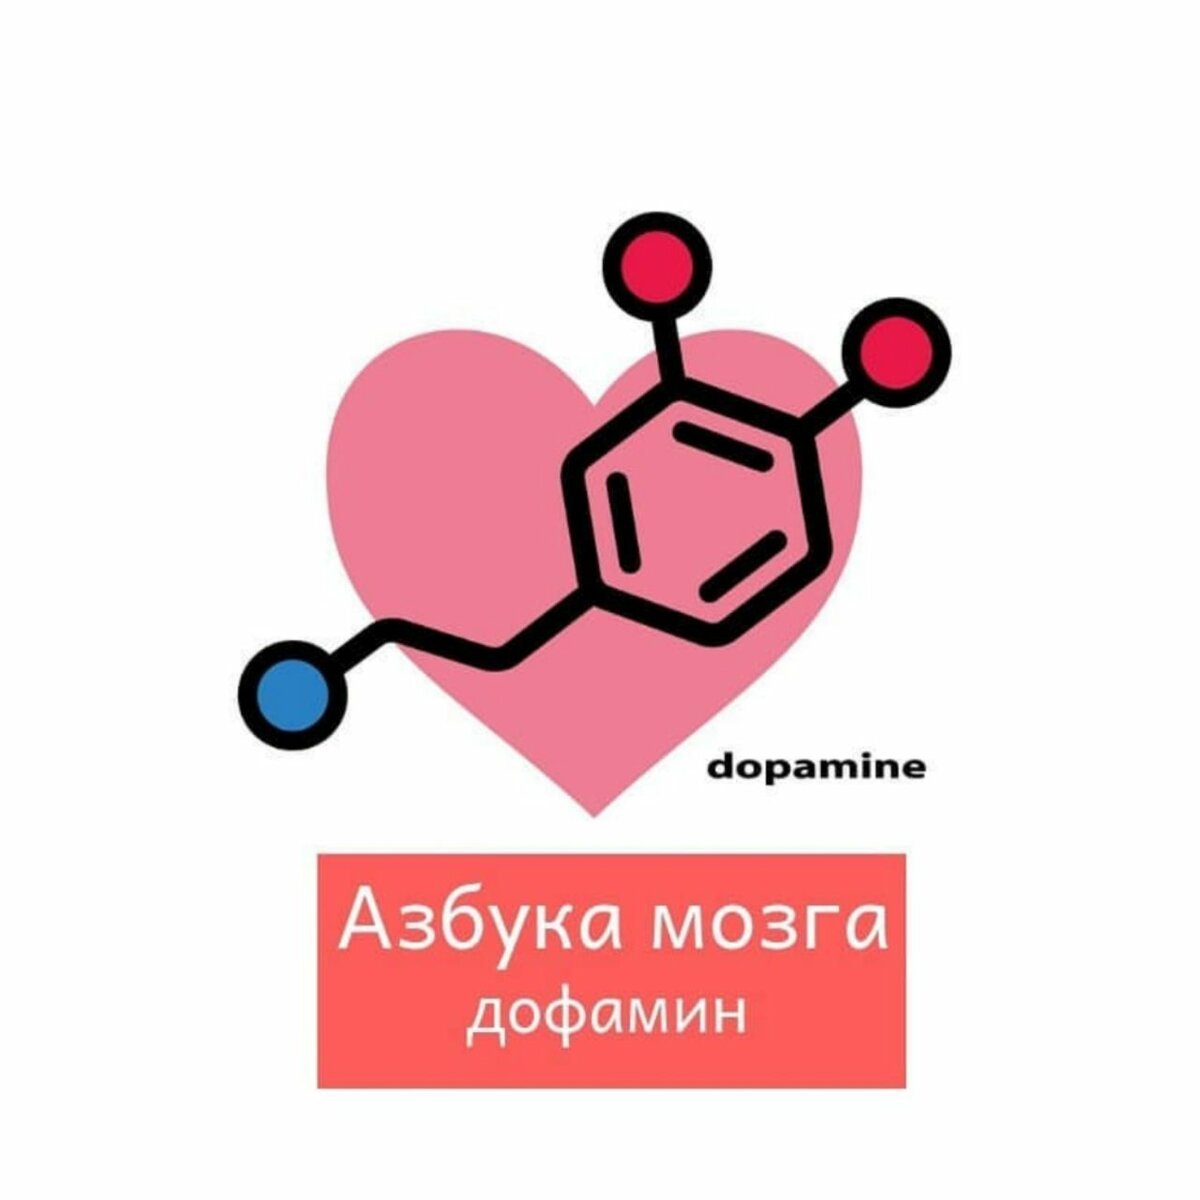 Дофамин концентрат. Дофамин. Дофамин гормон. Молекула дофамина. Дофамин гормон картинка.